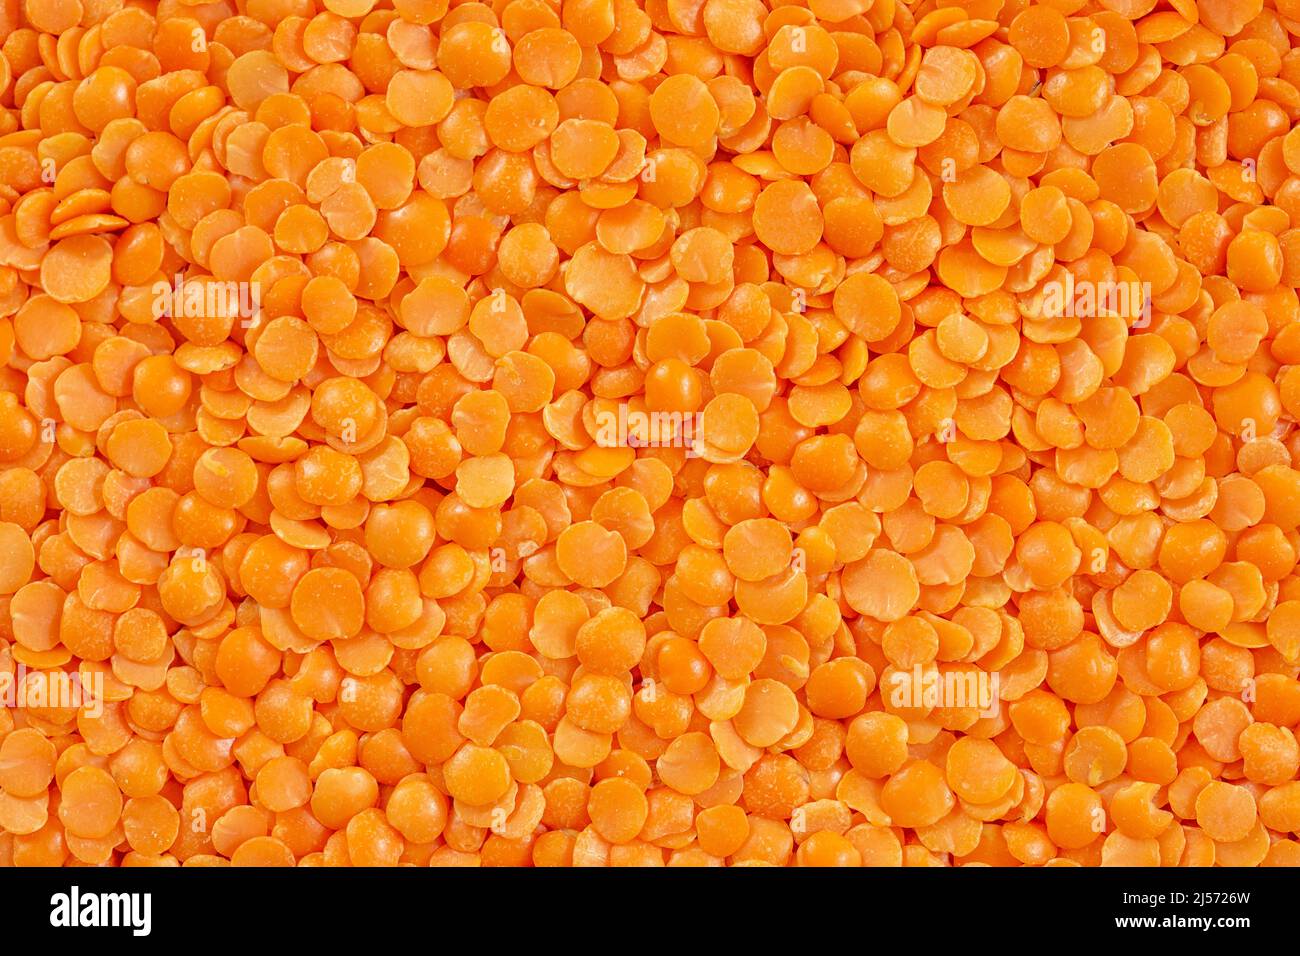 Red split lentil close-up. Stock Photo